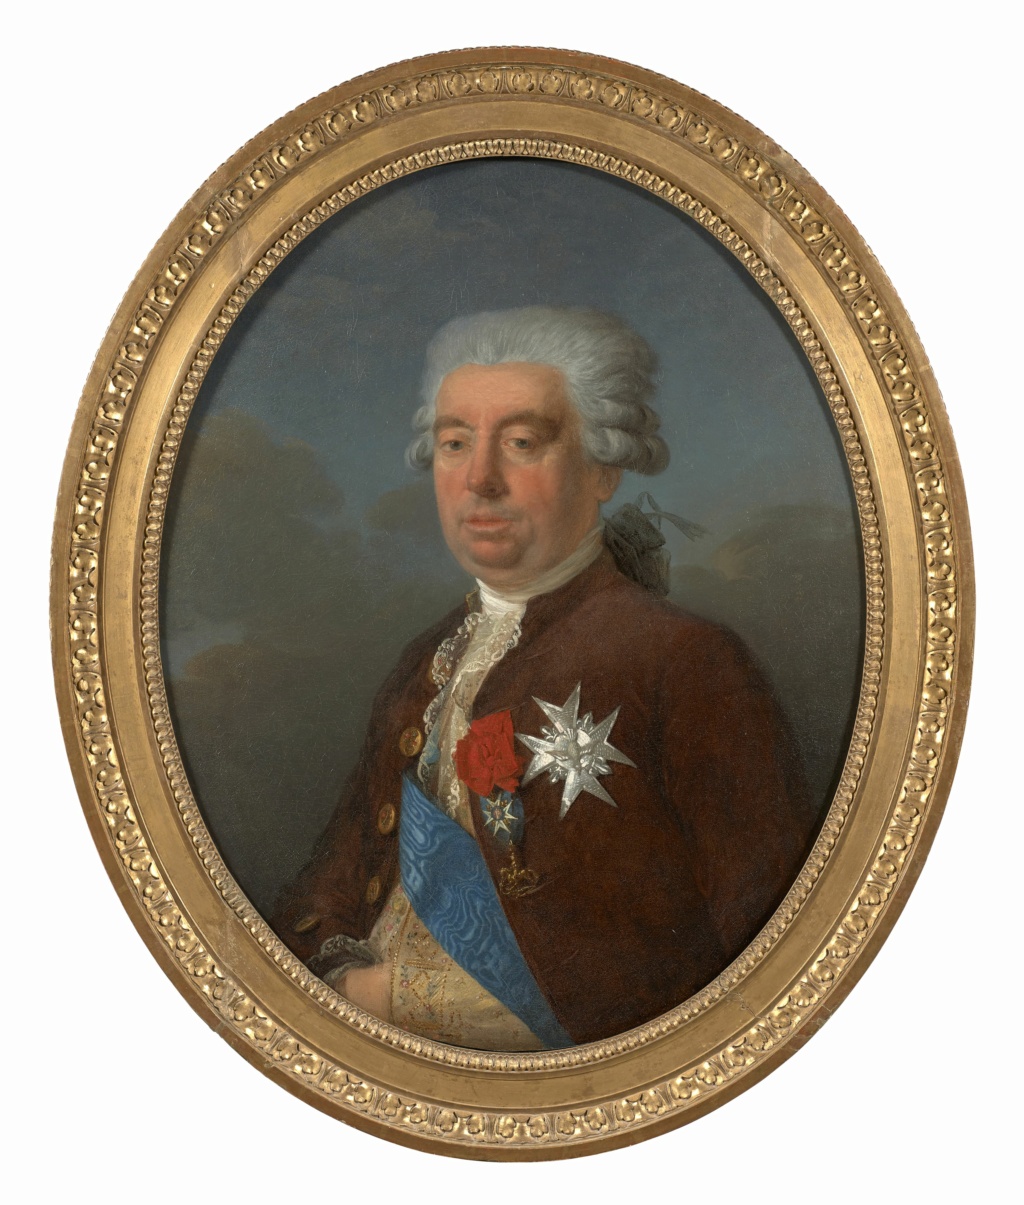 Alexandre-Marie-Eléonor de Saint-Mauris-Montbarrey, prince de Montbarrey 4208_143